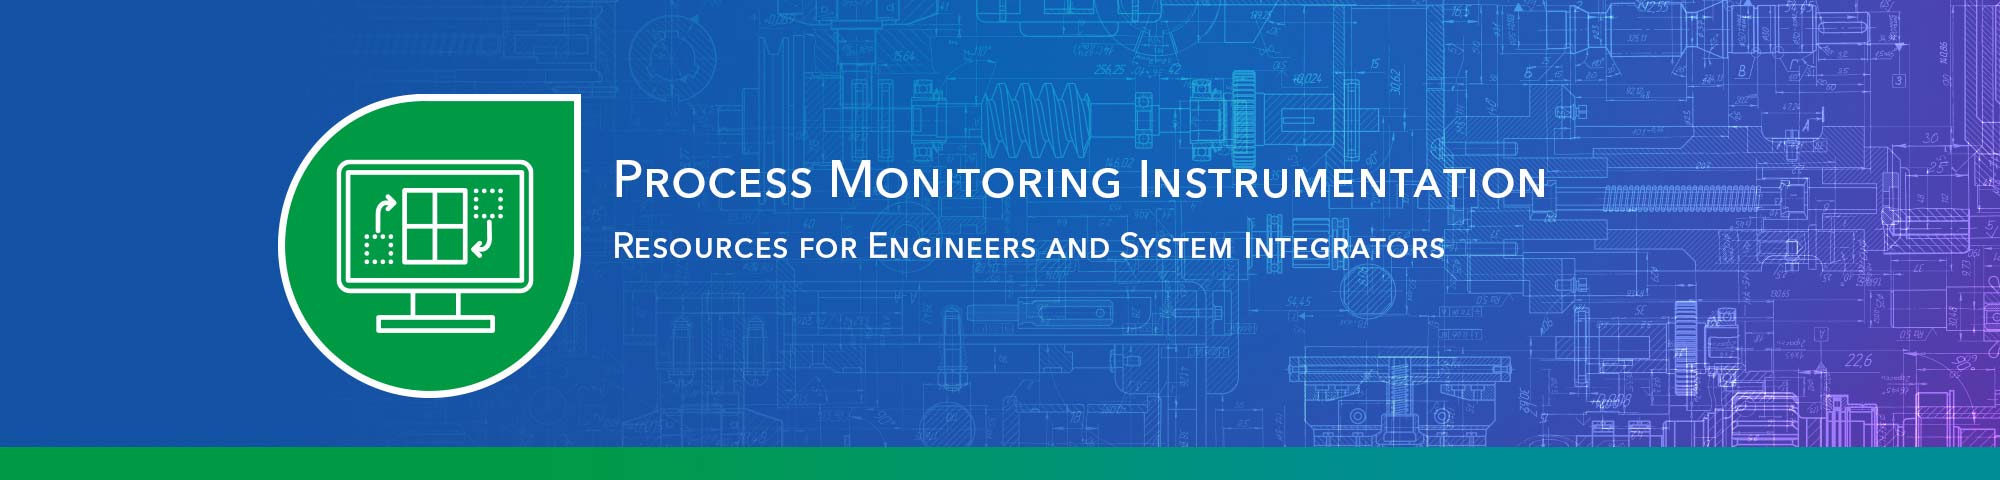 process monitoring instrumentation engineering resources